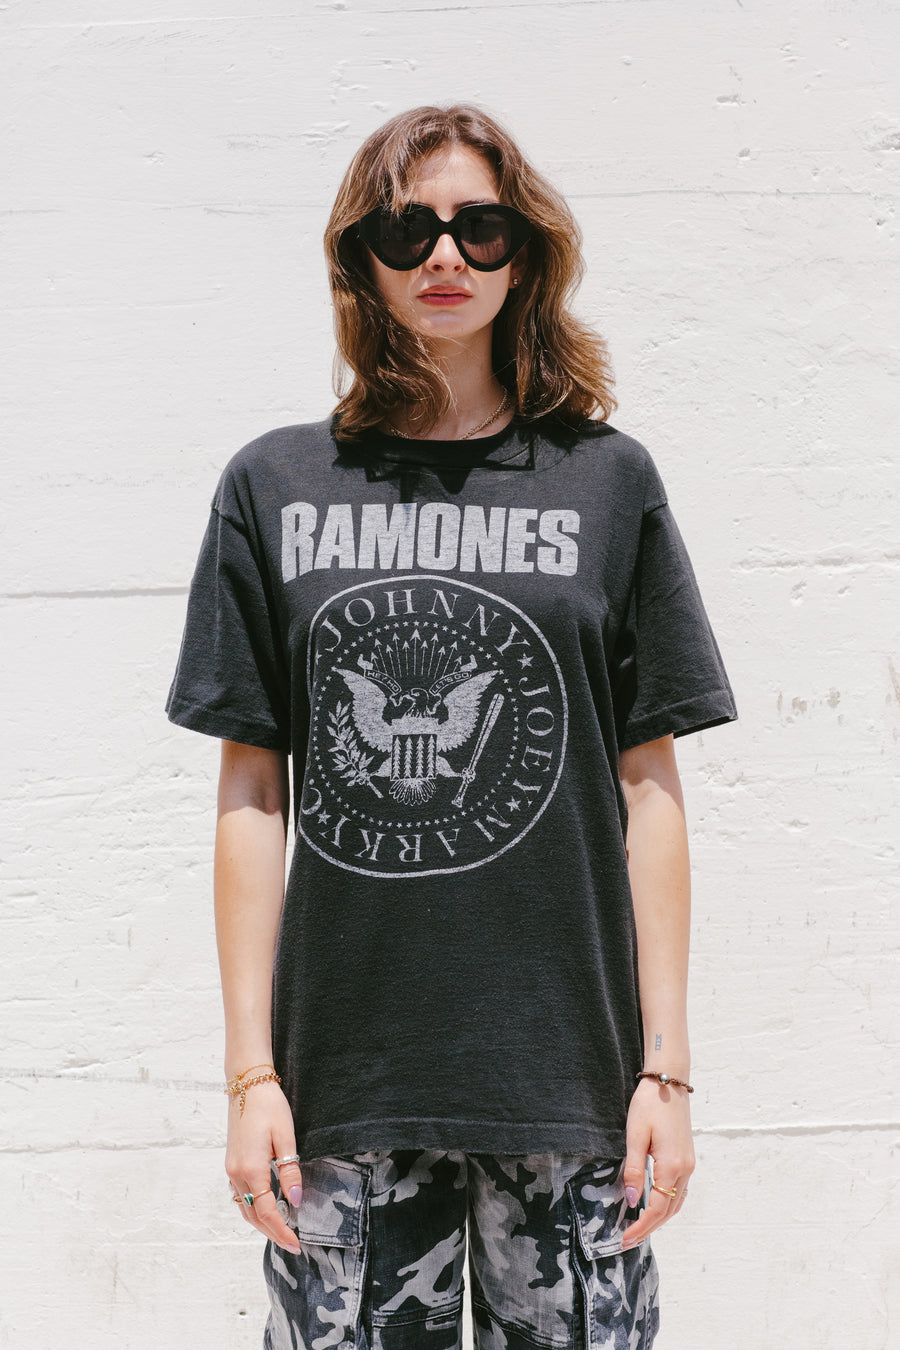 Ramones Vintage Shirt